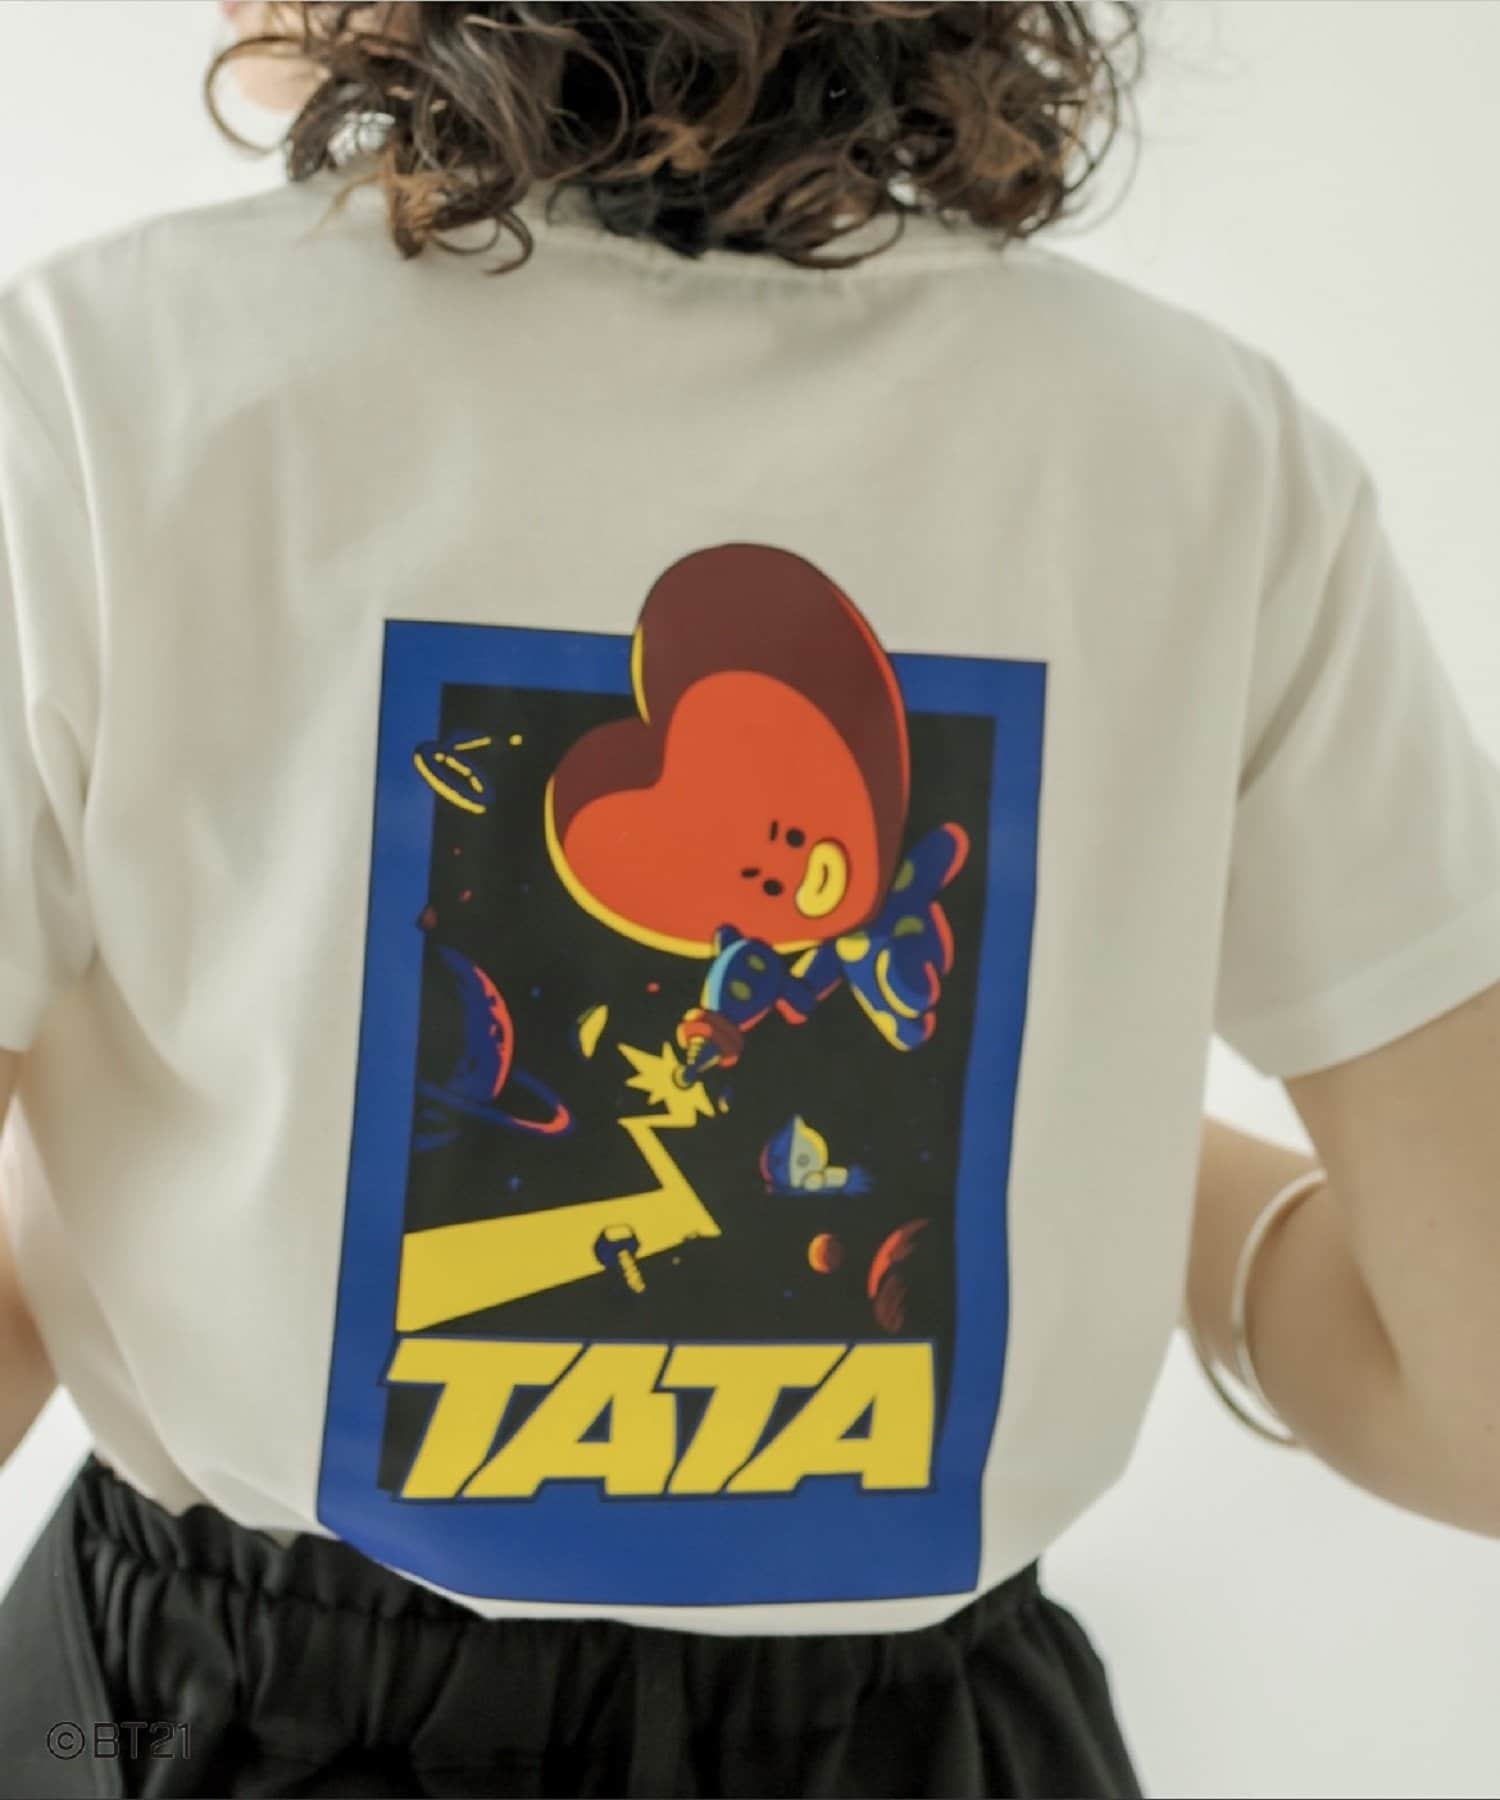 mystic(ミスティック) [BT21] TATA Tシャツ